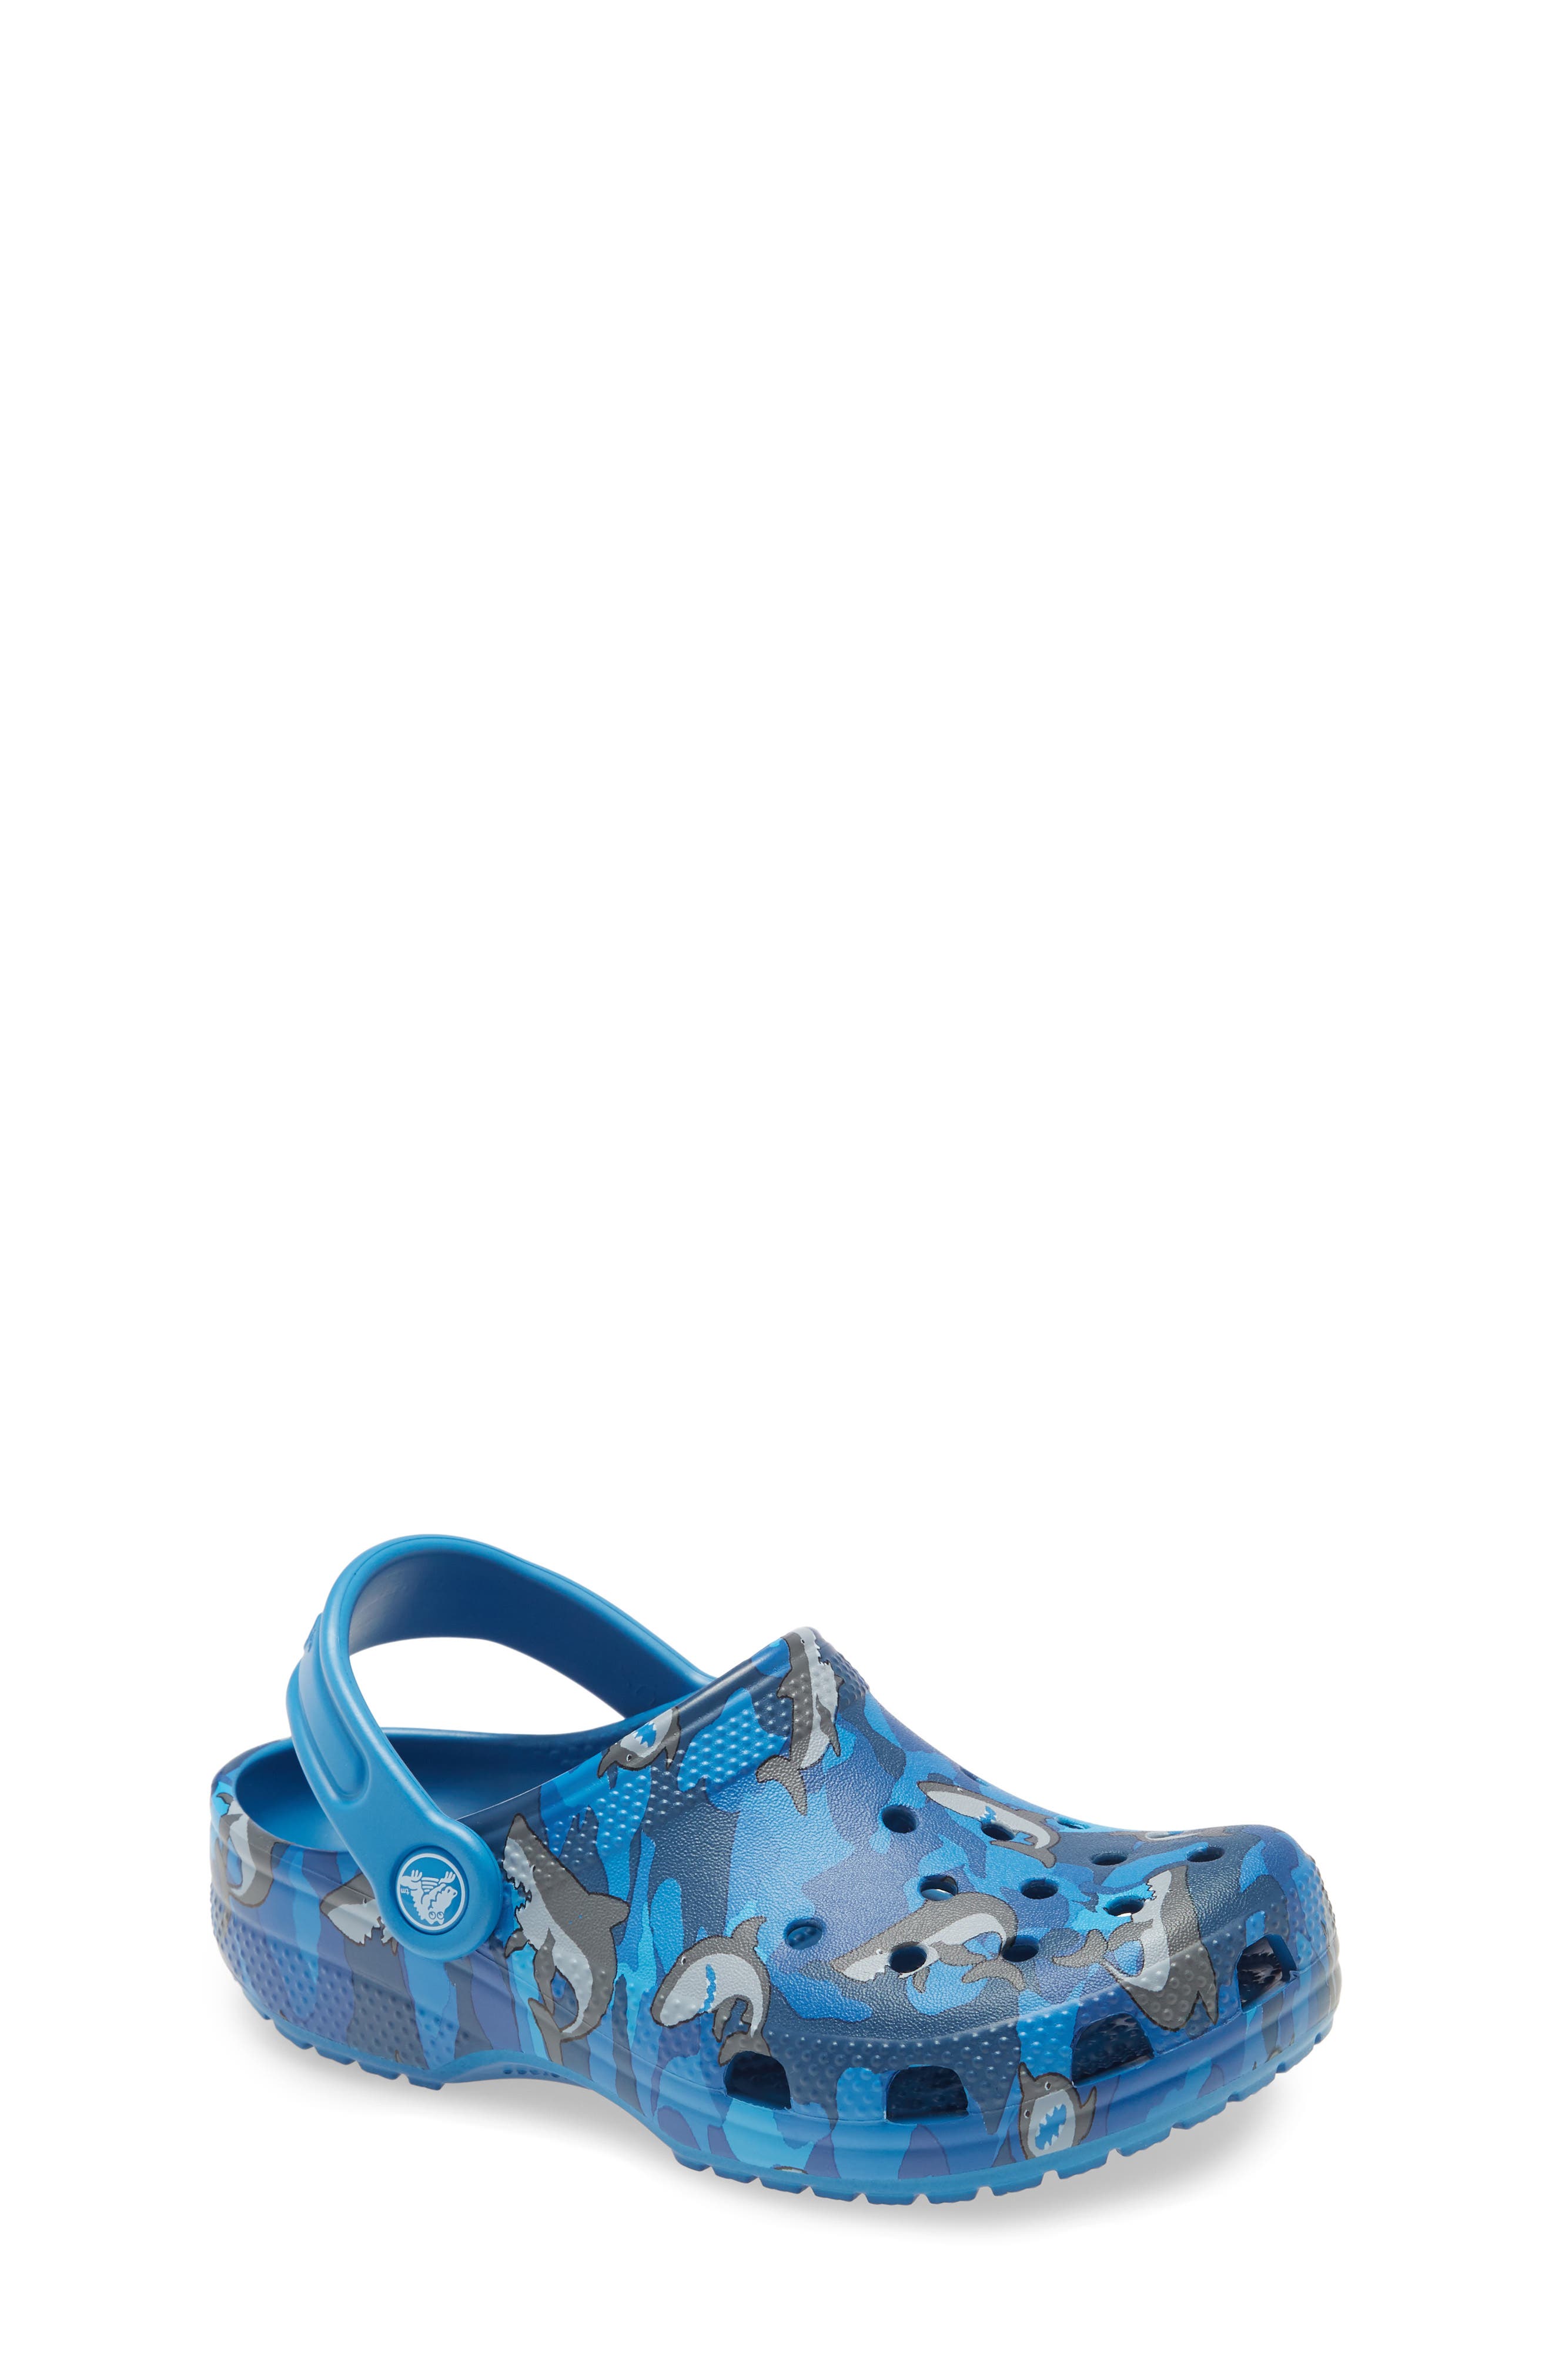 ice blue crocs size 8